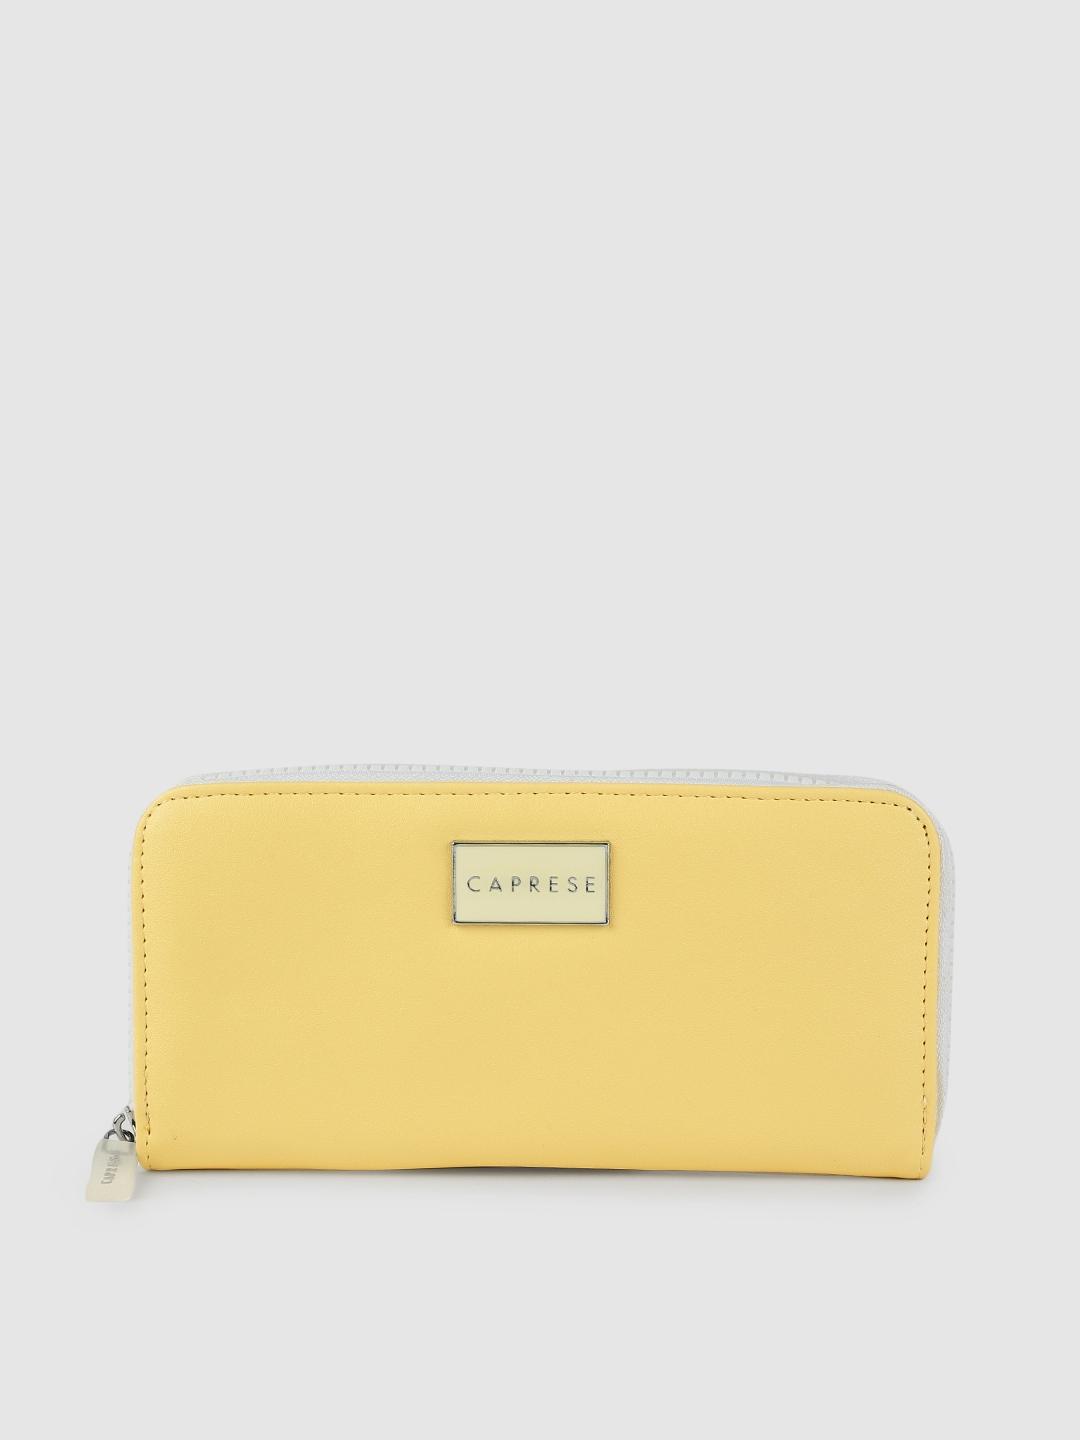 caprese women yellow & white solid leather zip around wallet